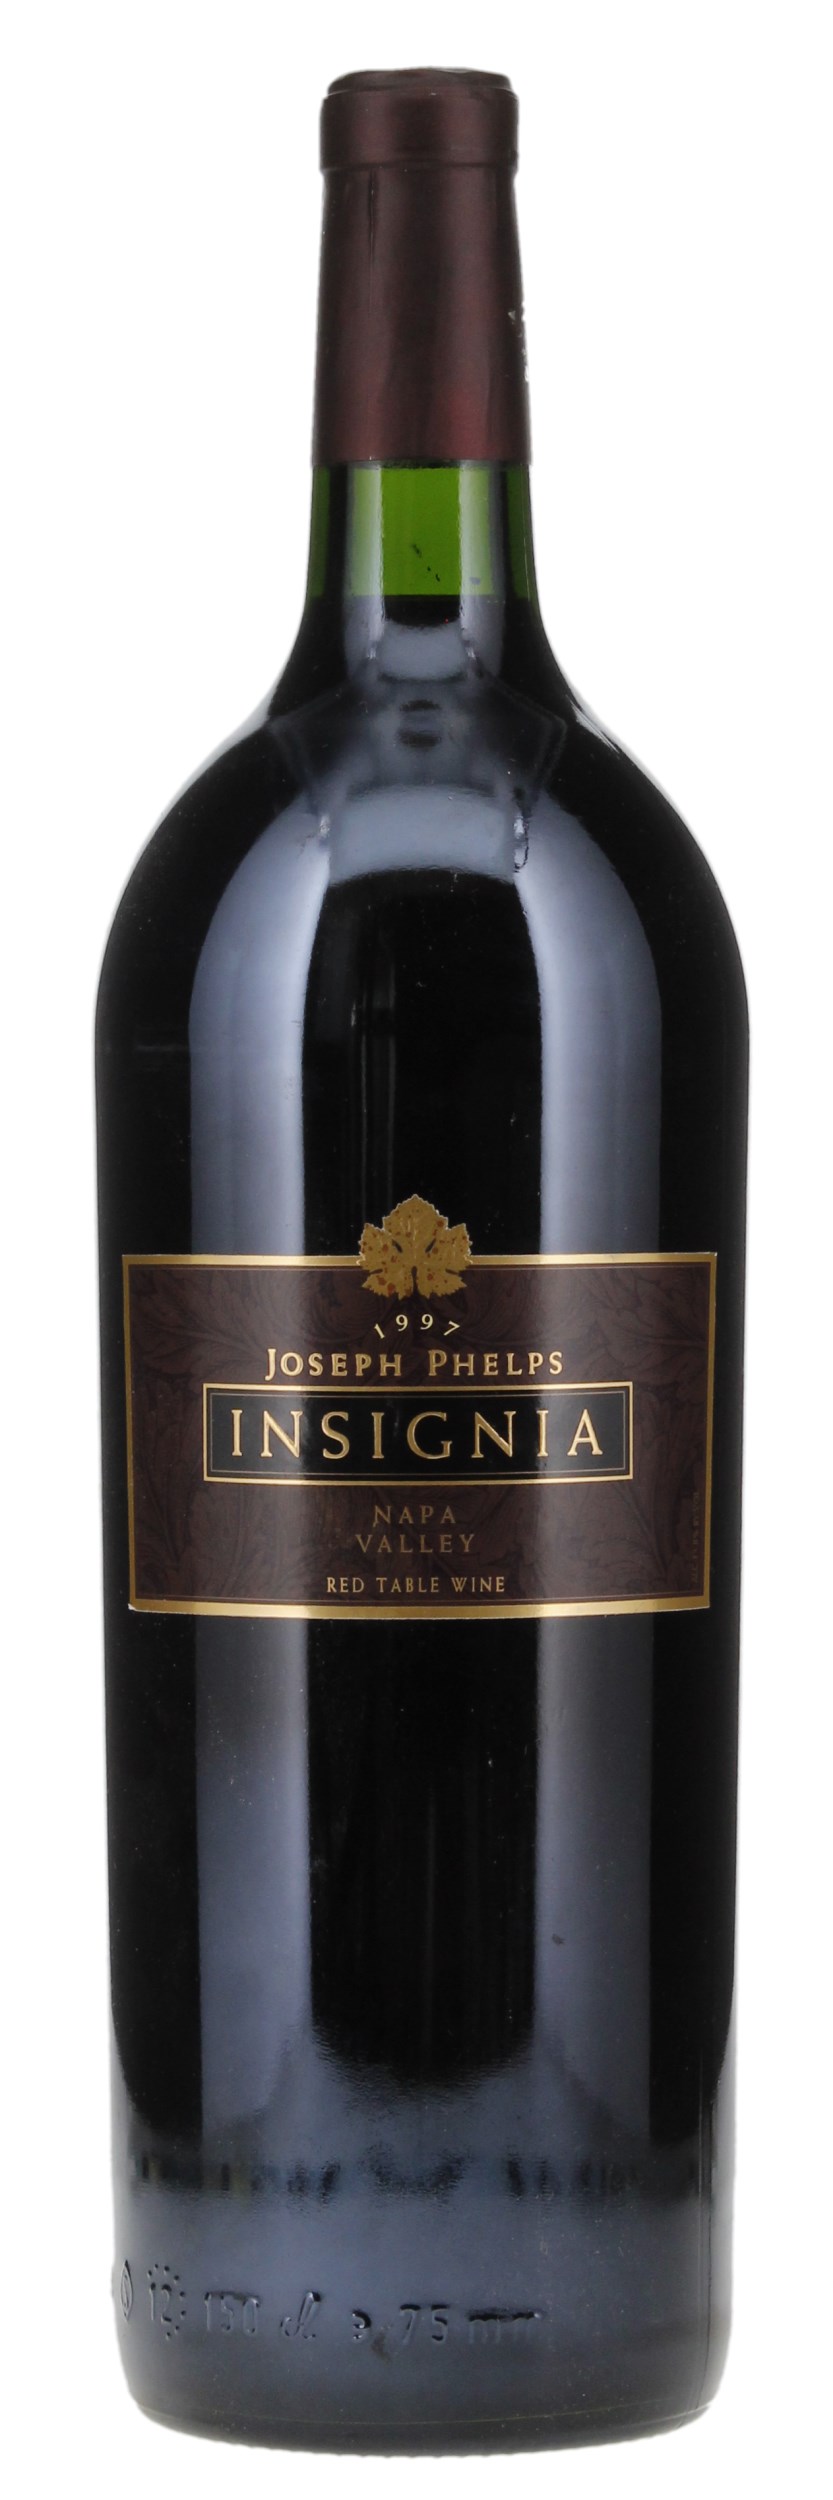 1997 Joseph Phelps Insignia, 1.5ltr